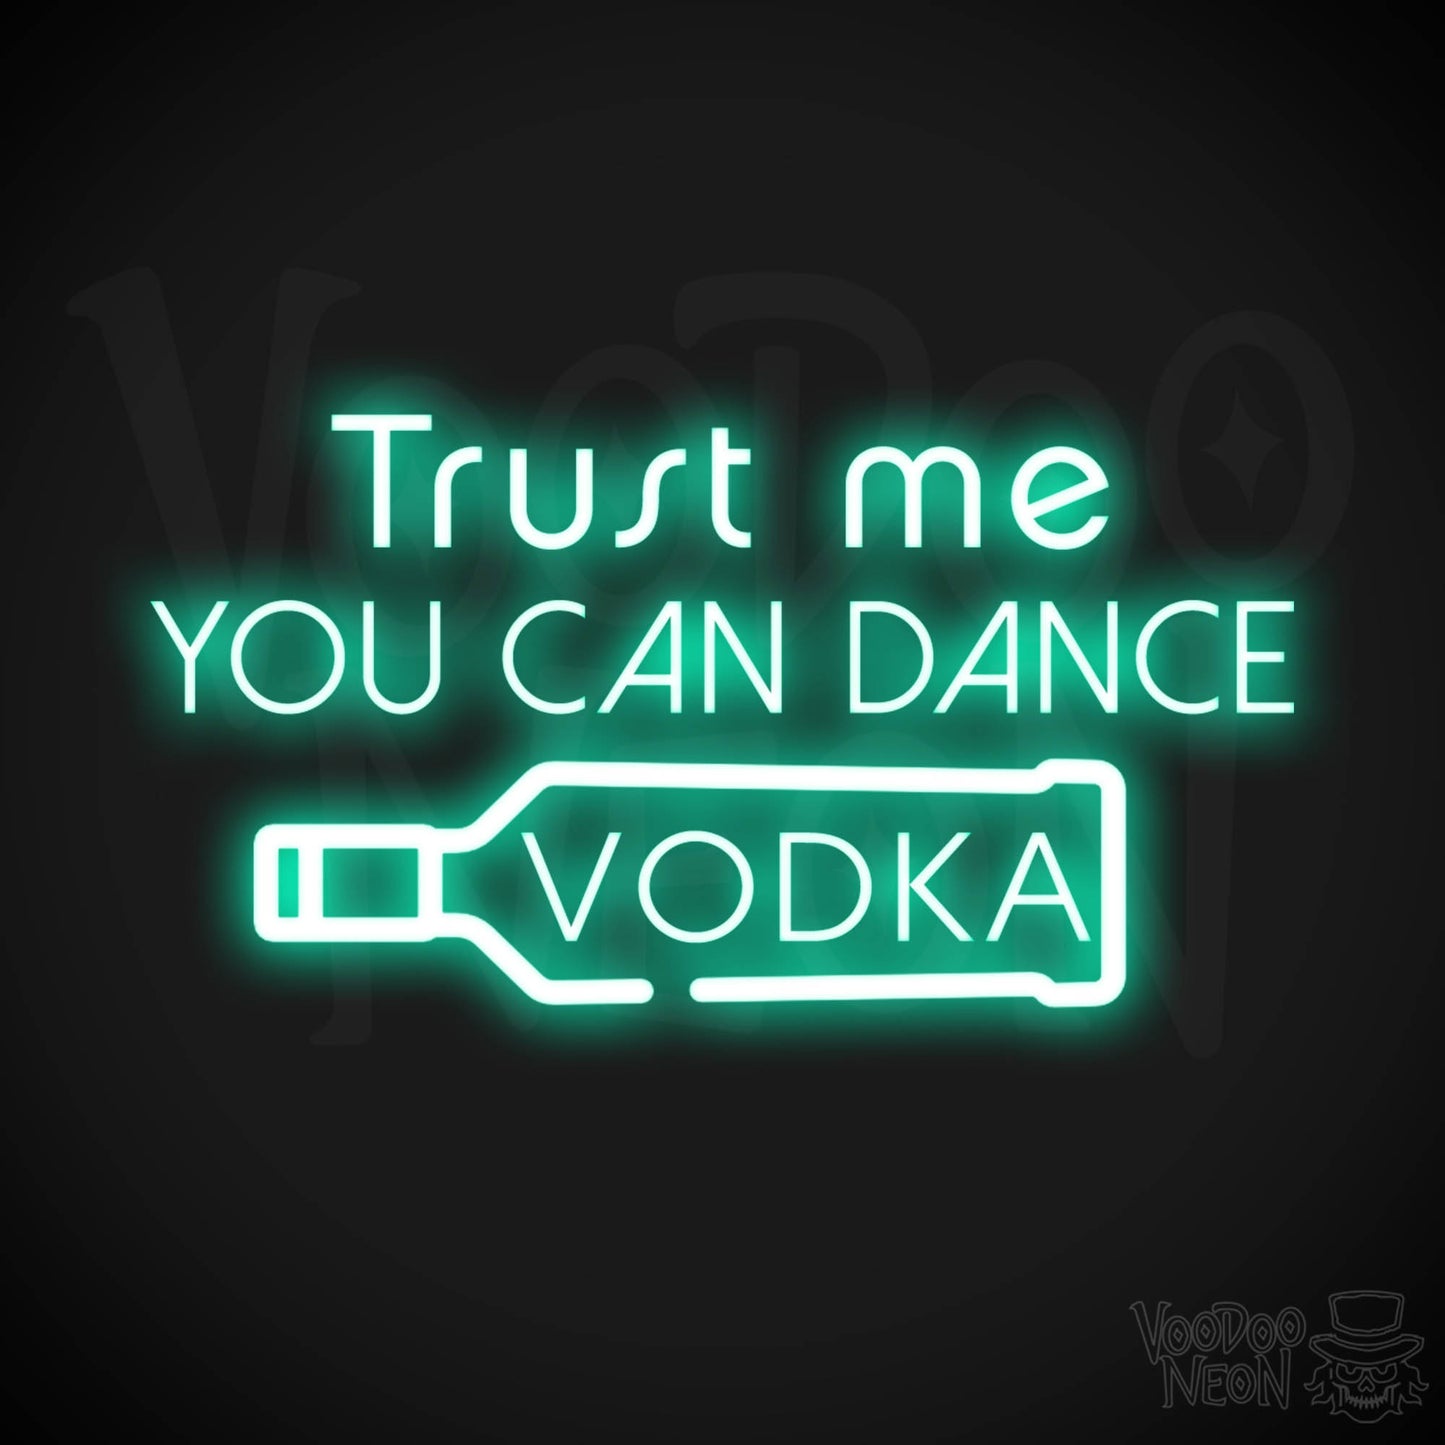 Trust Me You Can Dance Vodka Neon Sign - Vodka Bar Sign - LED Signs - Color Light Green